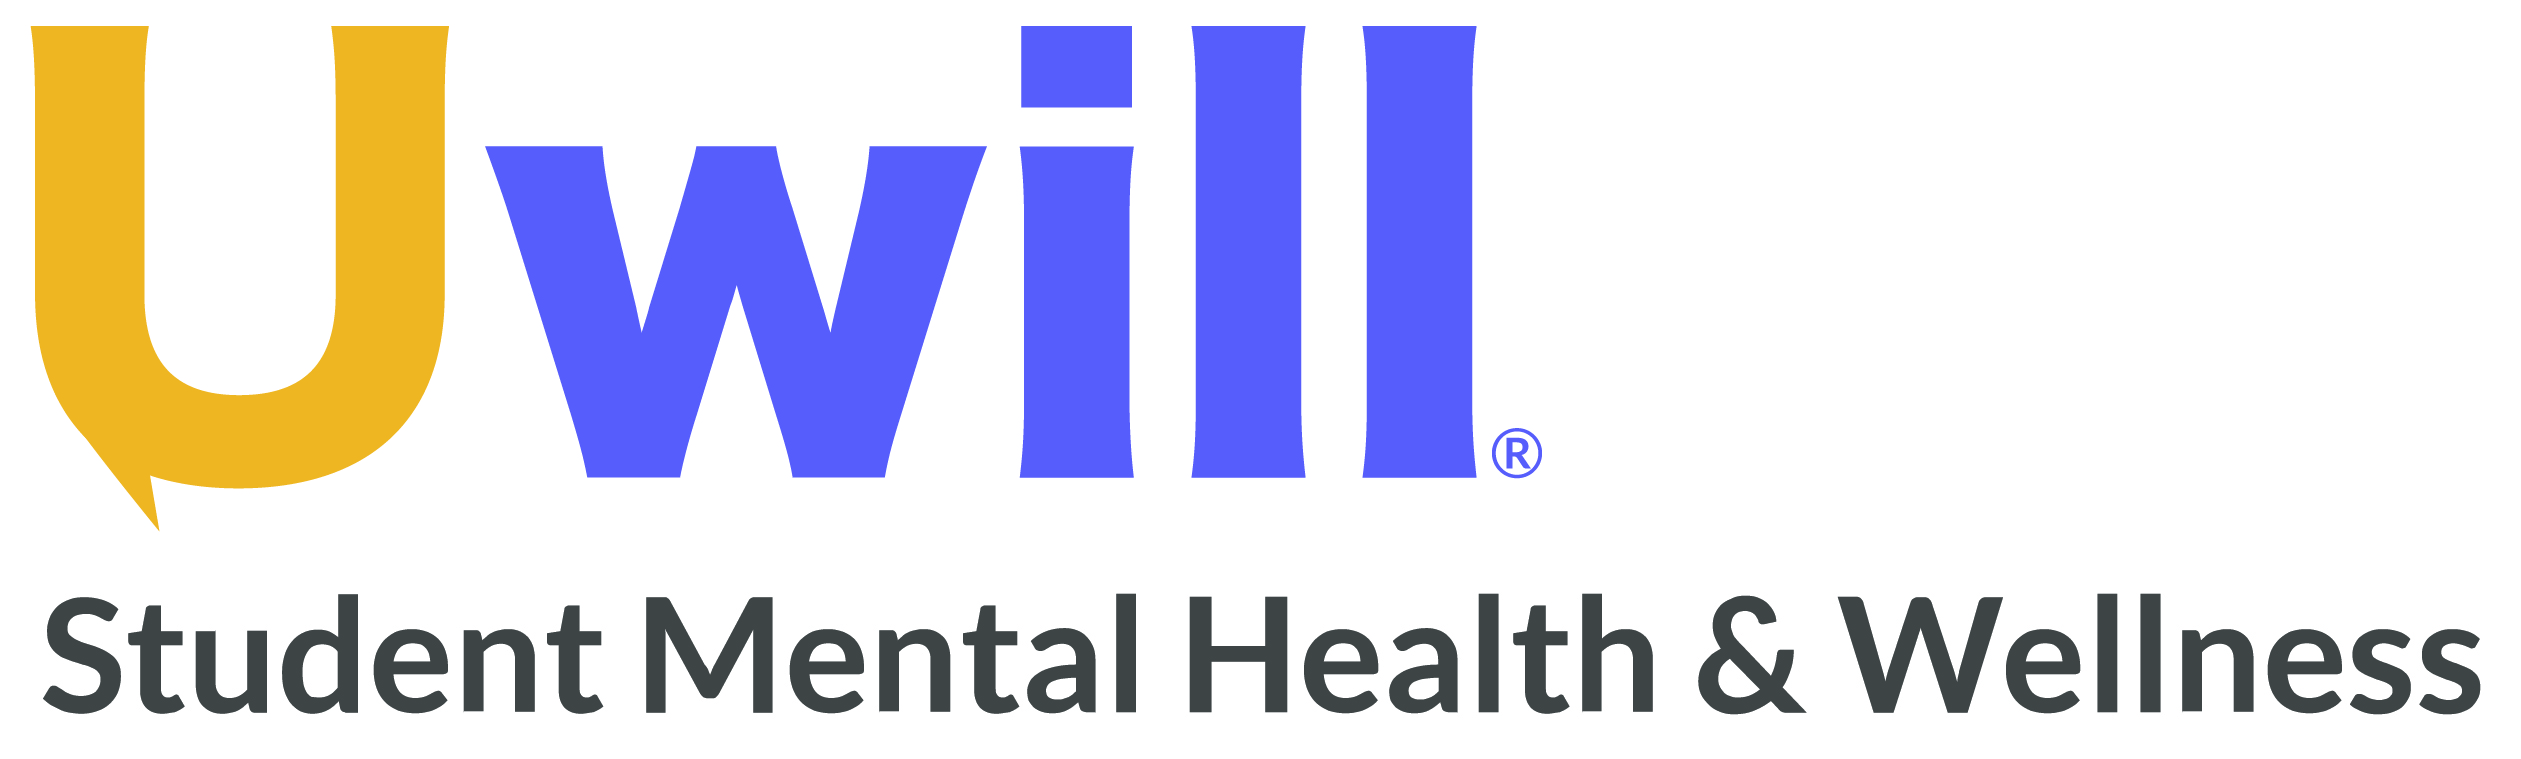 Uwill Student Mental Health and Wellness logo